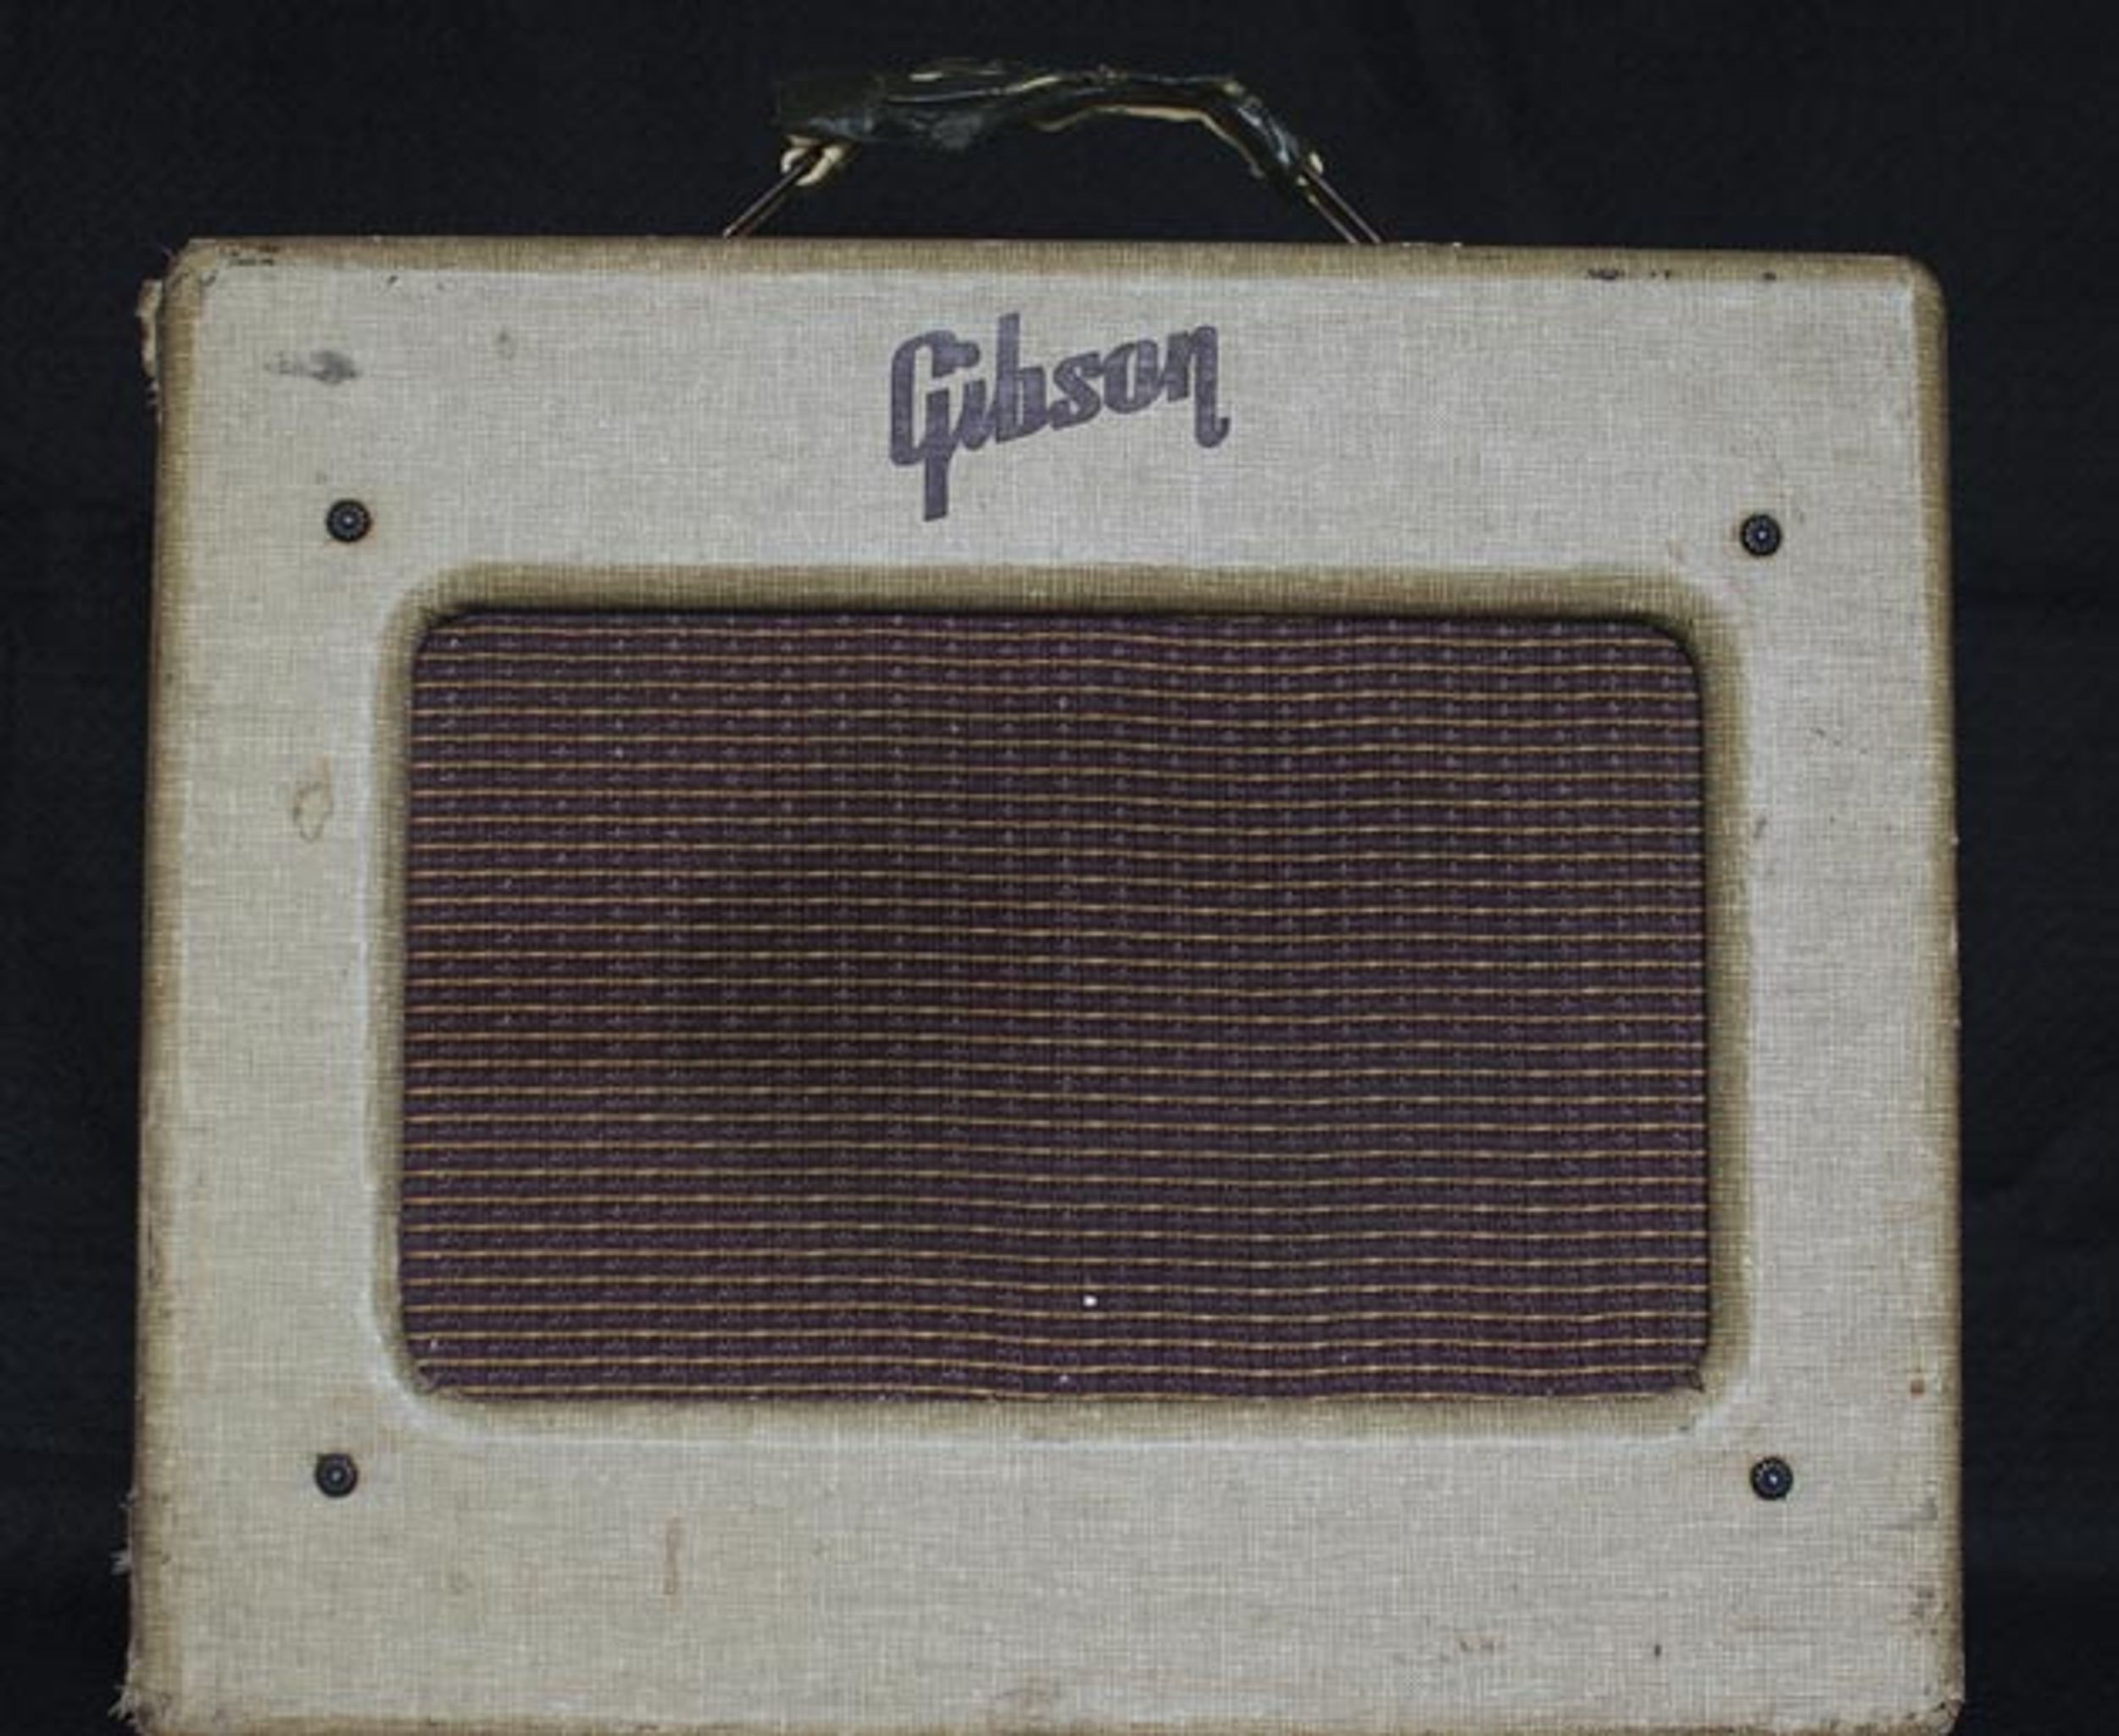 Undervalued Gear: The Gibson Les Paul Junior GA-5 Amplifier